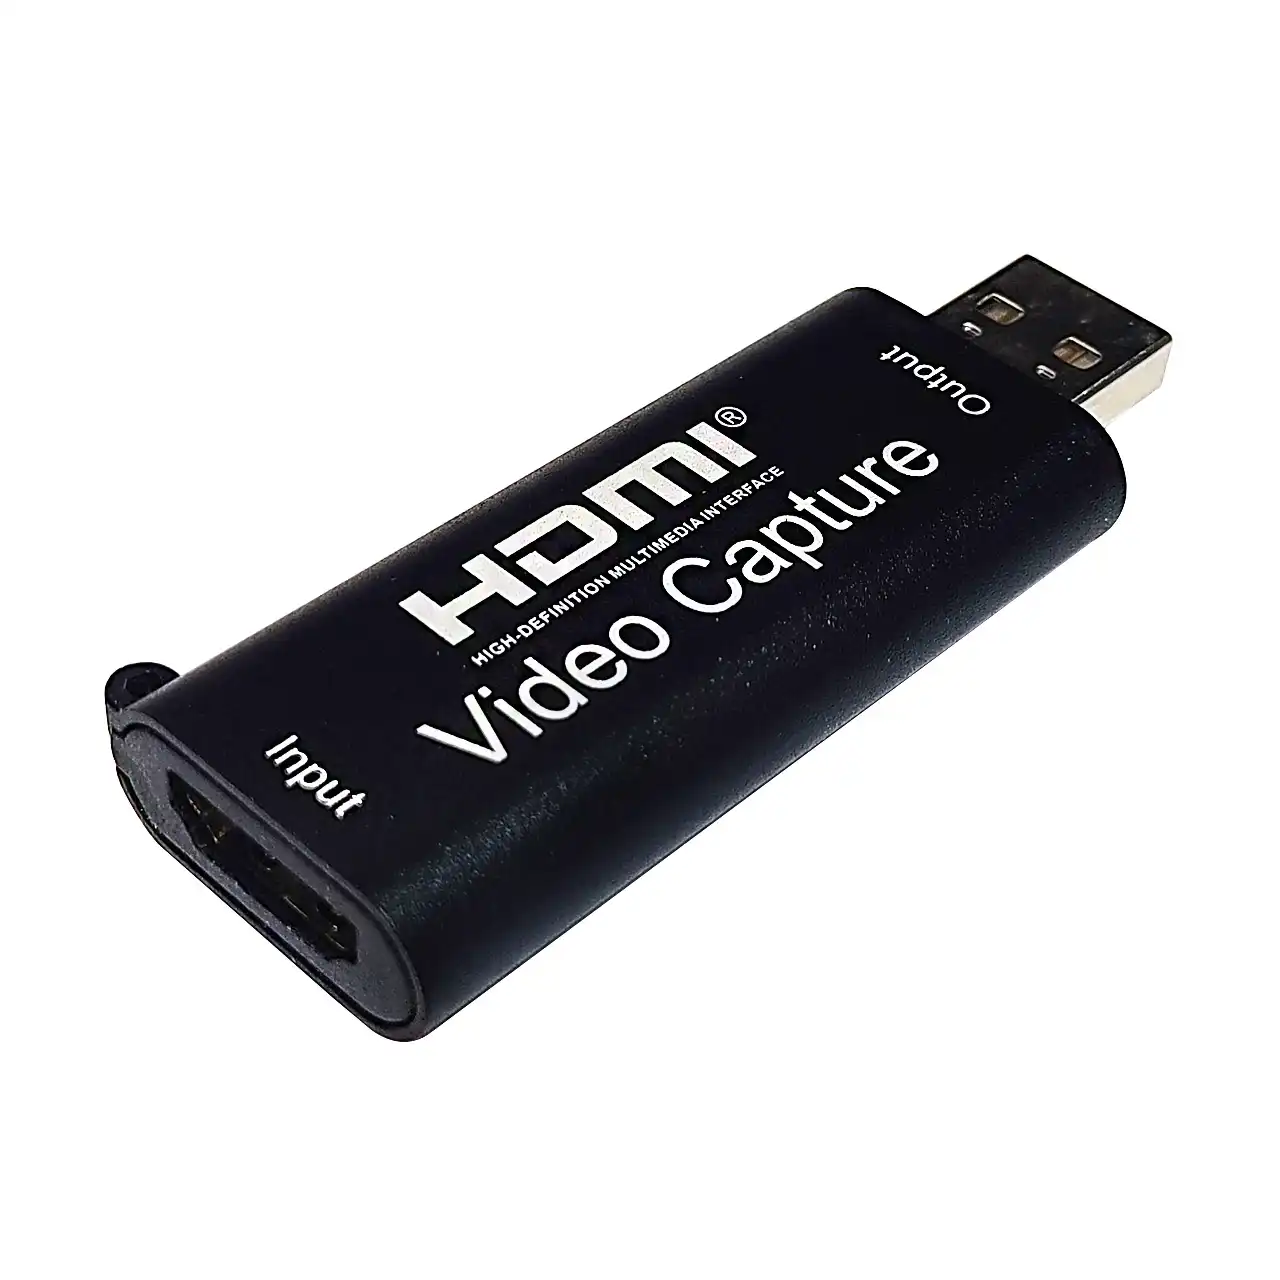  کارت کپچر اکسترنال HDMI